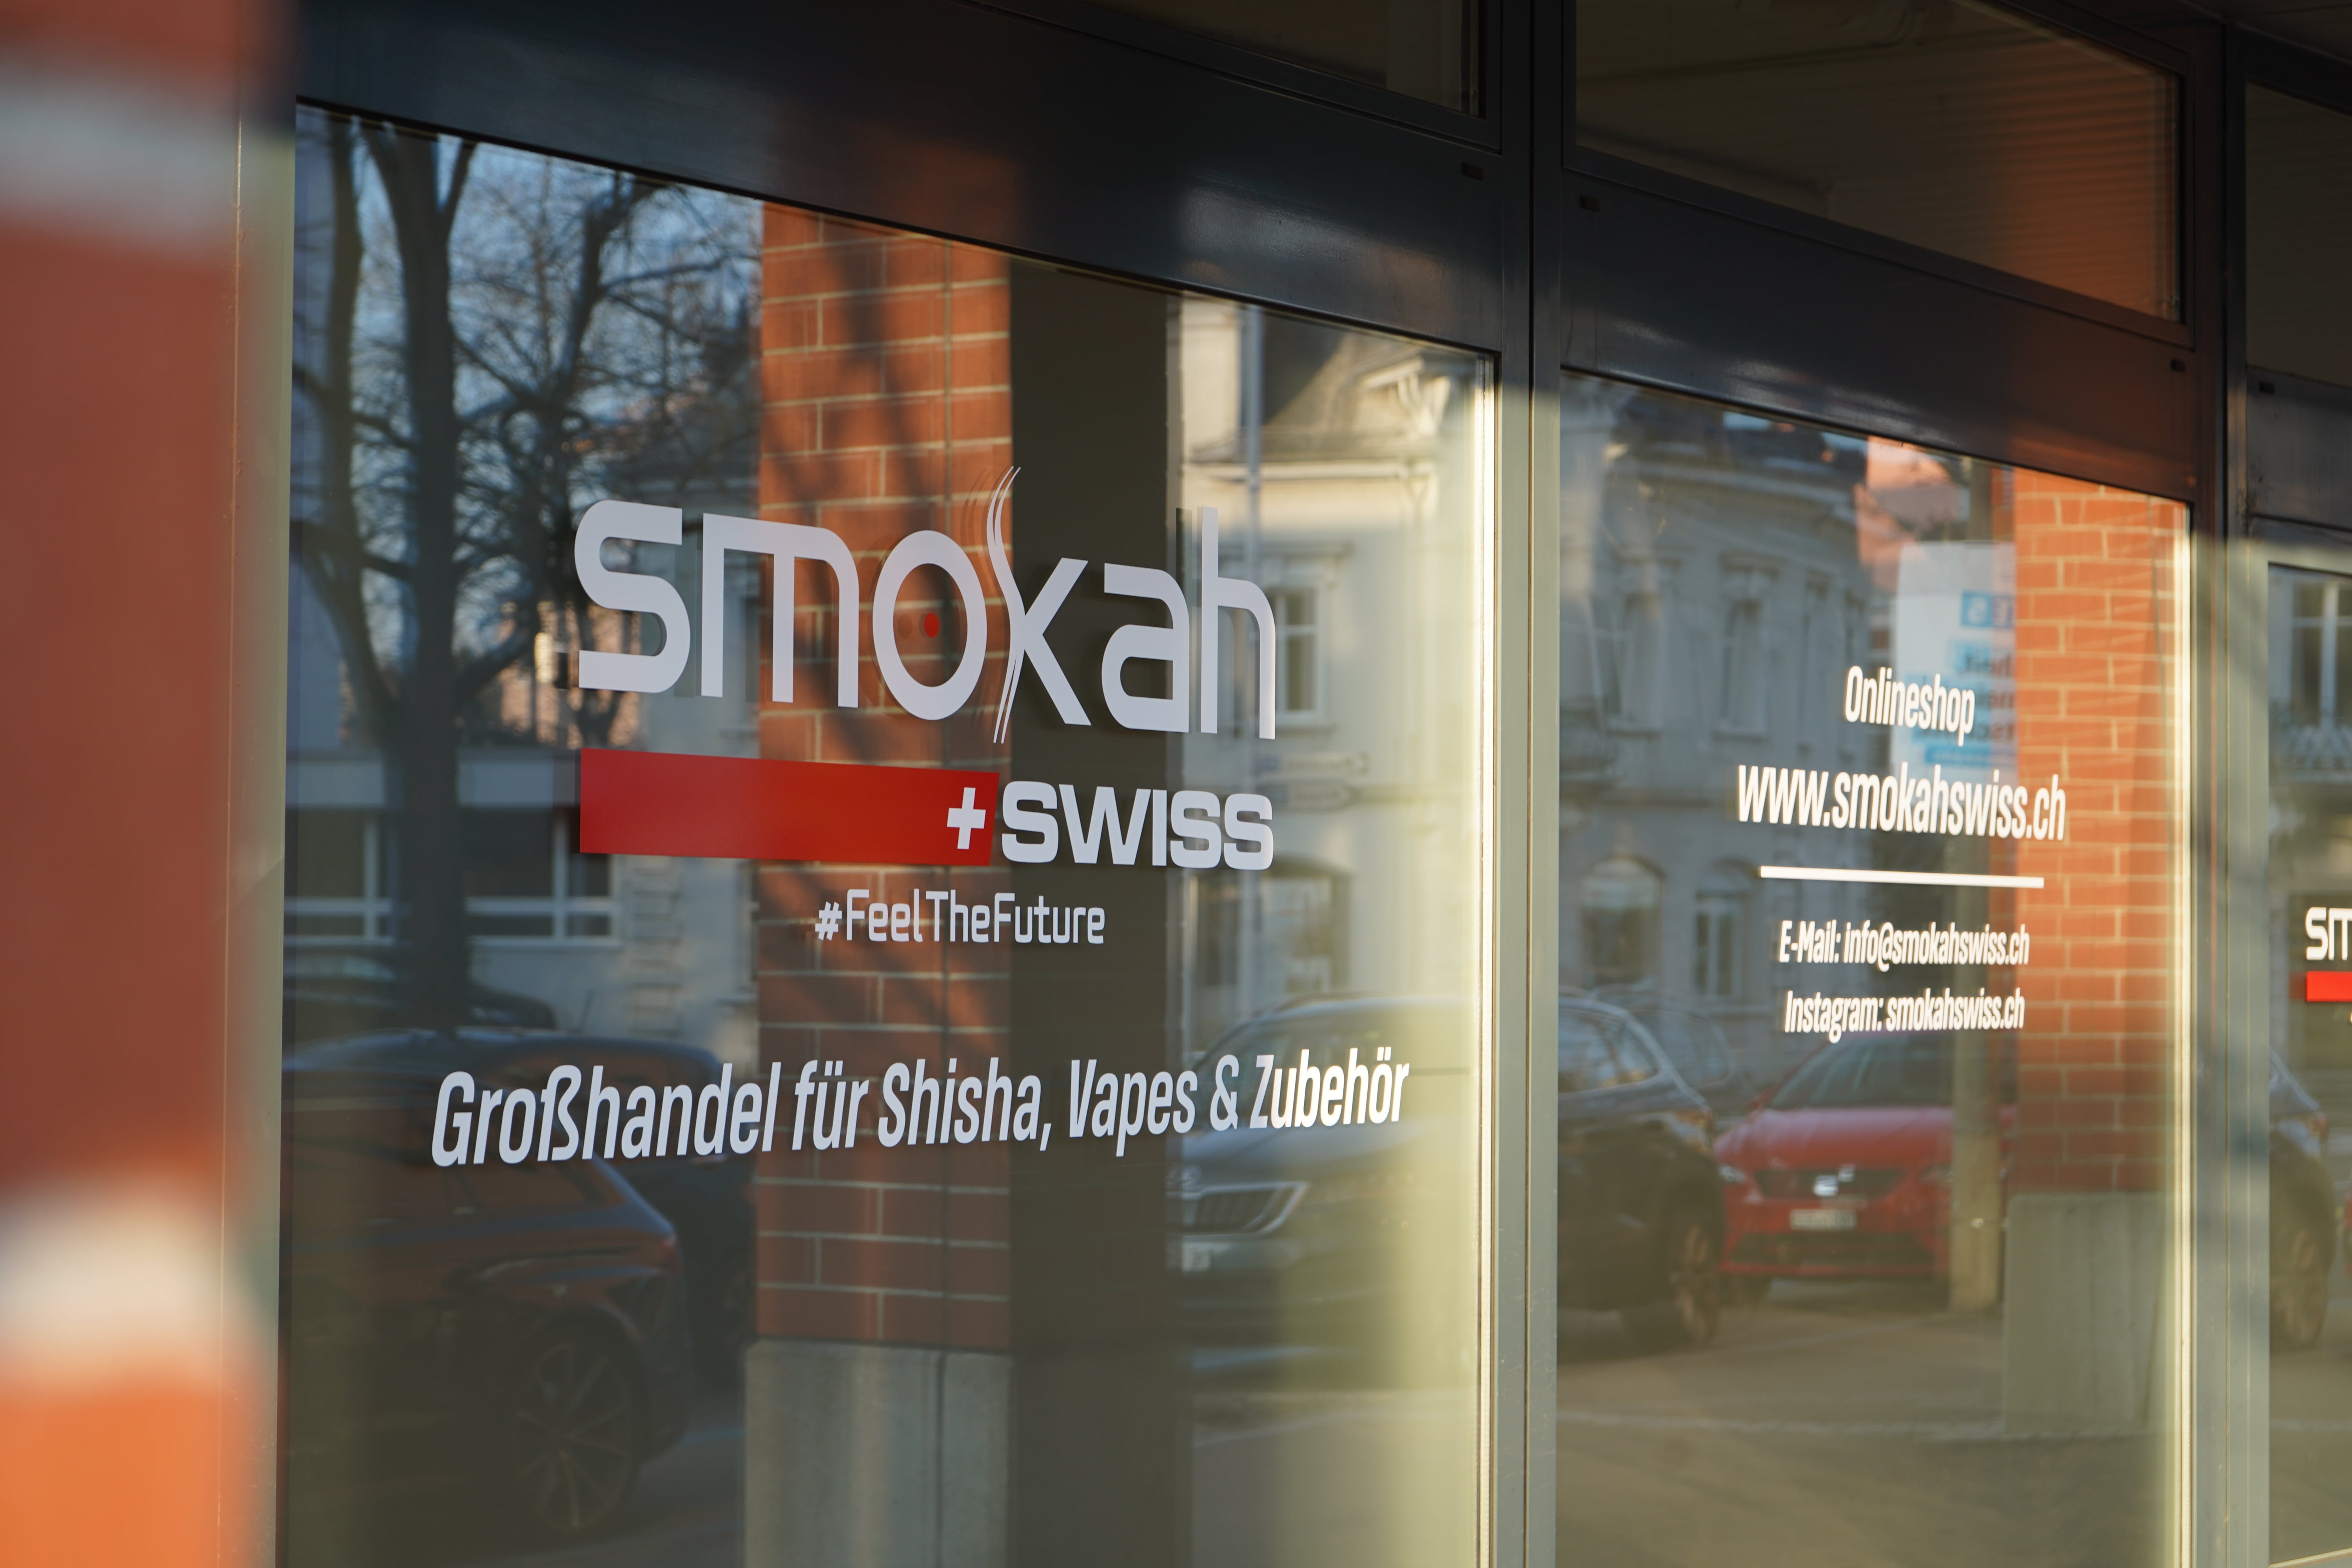 SMOKAHSWISS | Shisha kaufen Schweiz